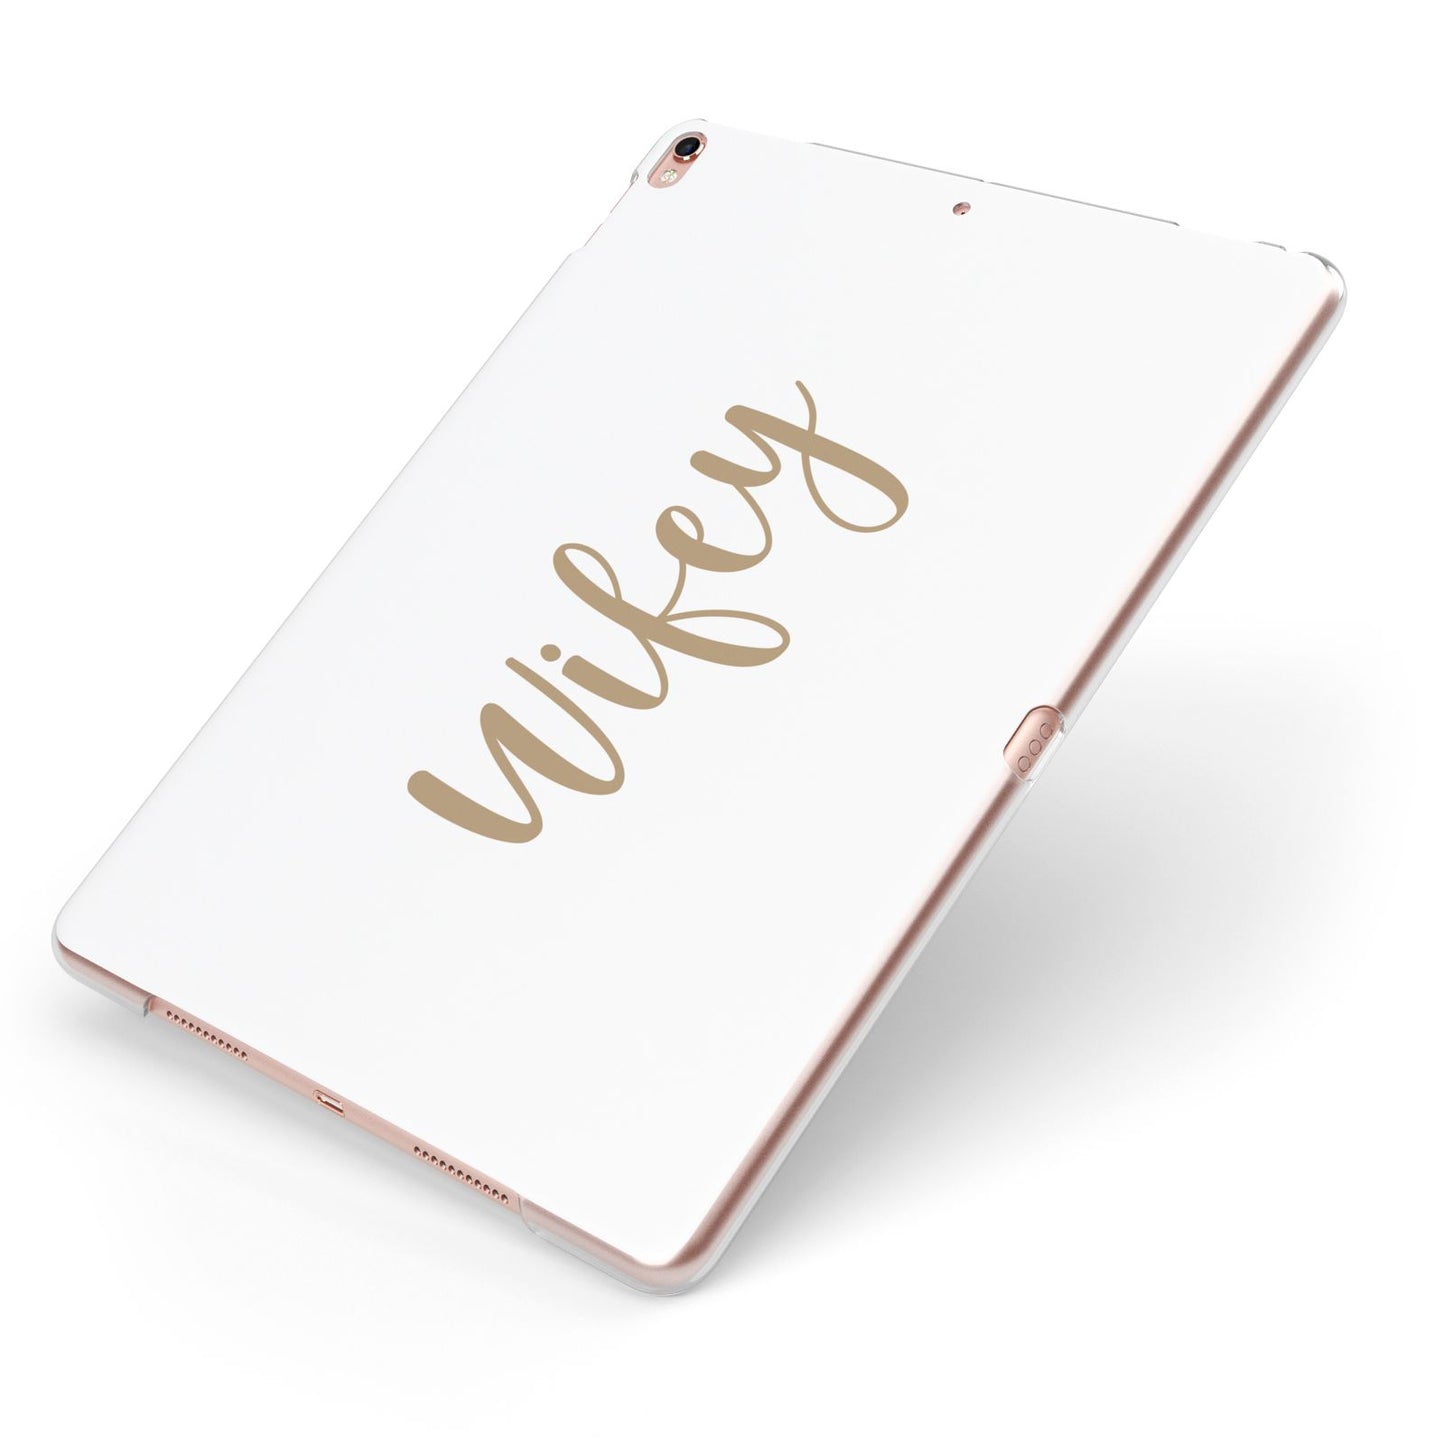 Wifey Apple iPad Case on Rose Gold iPad Side View